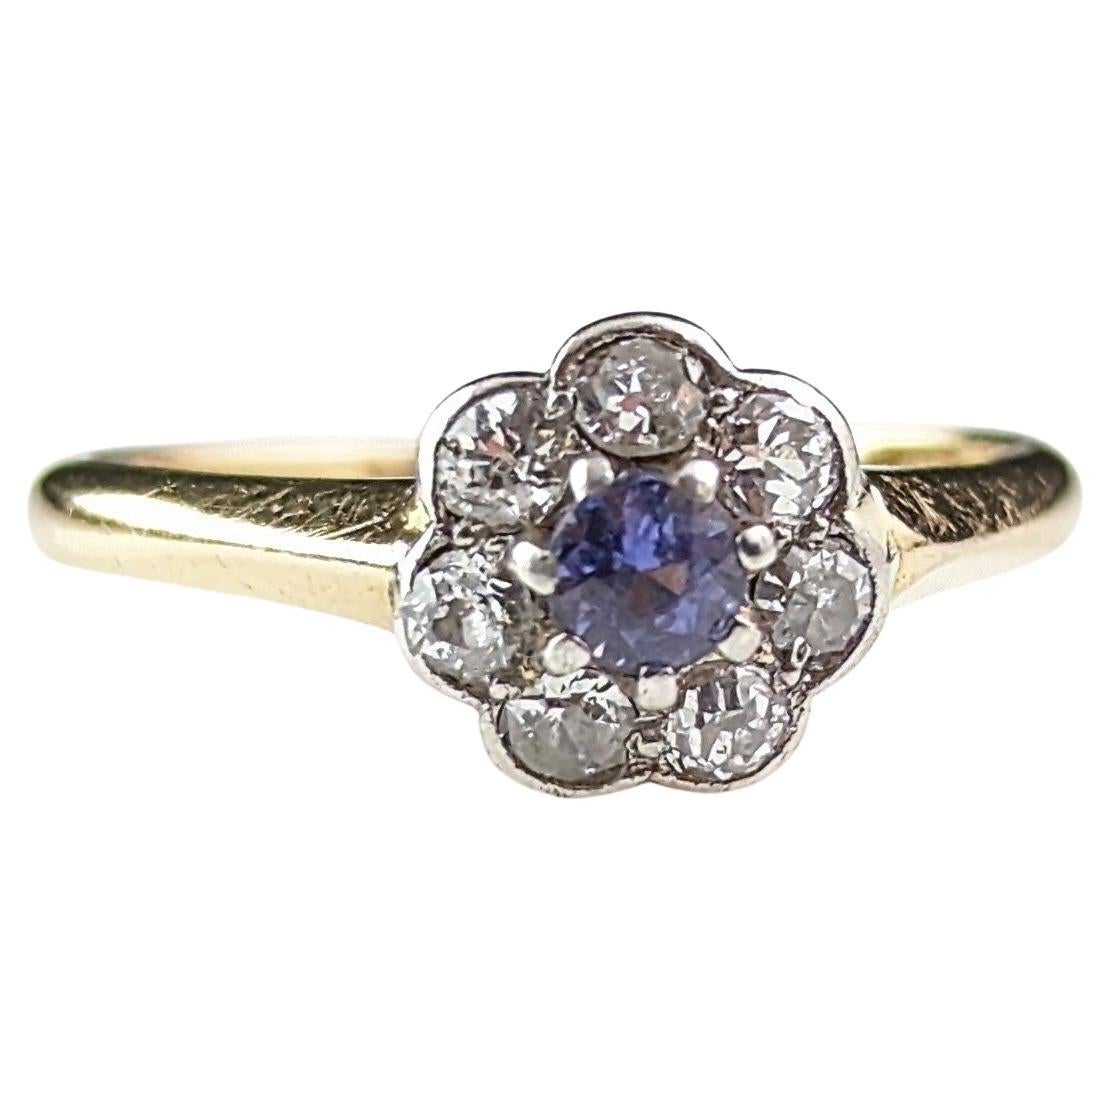 Antique Art Deco Sapphire and Diamond flower ring, 18k gold 